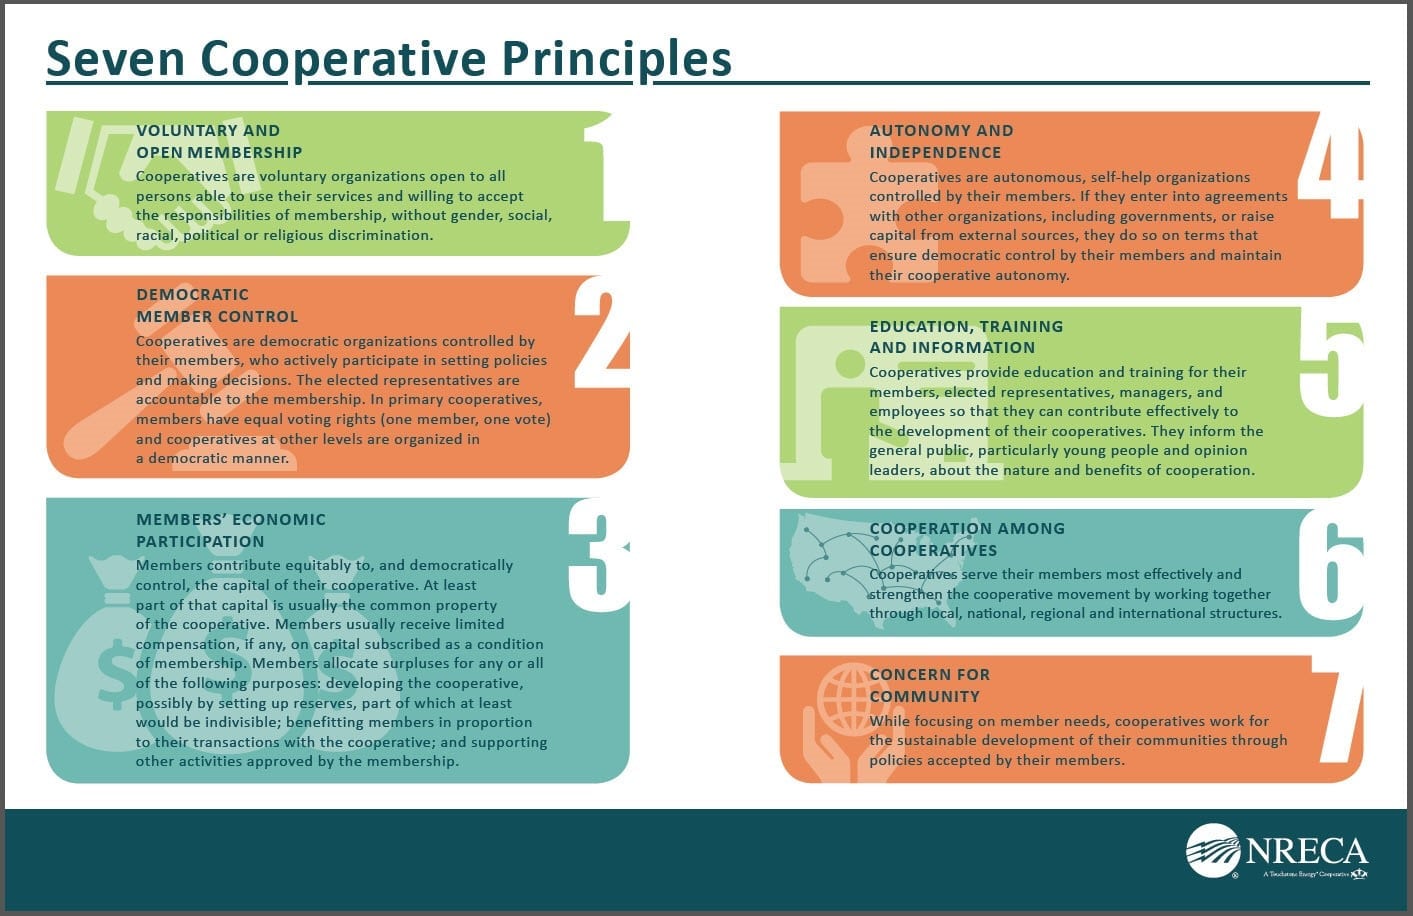 7 cooperative principles